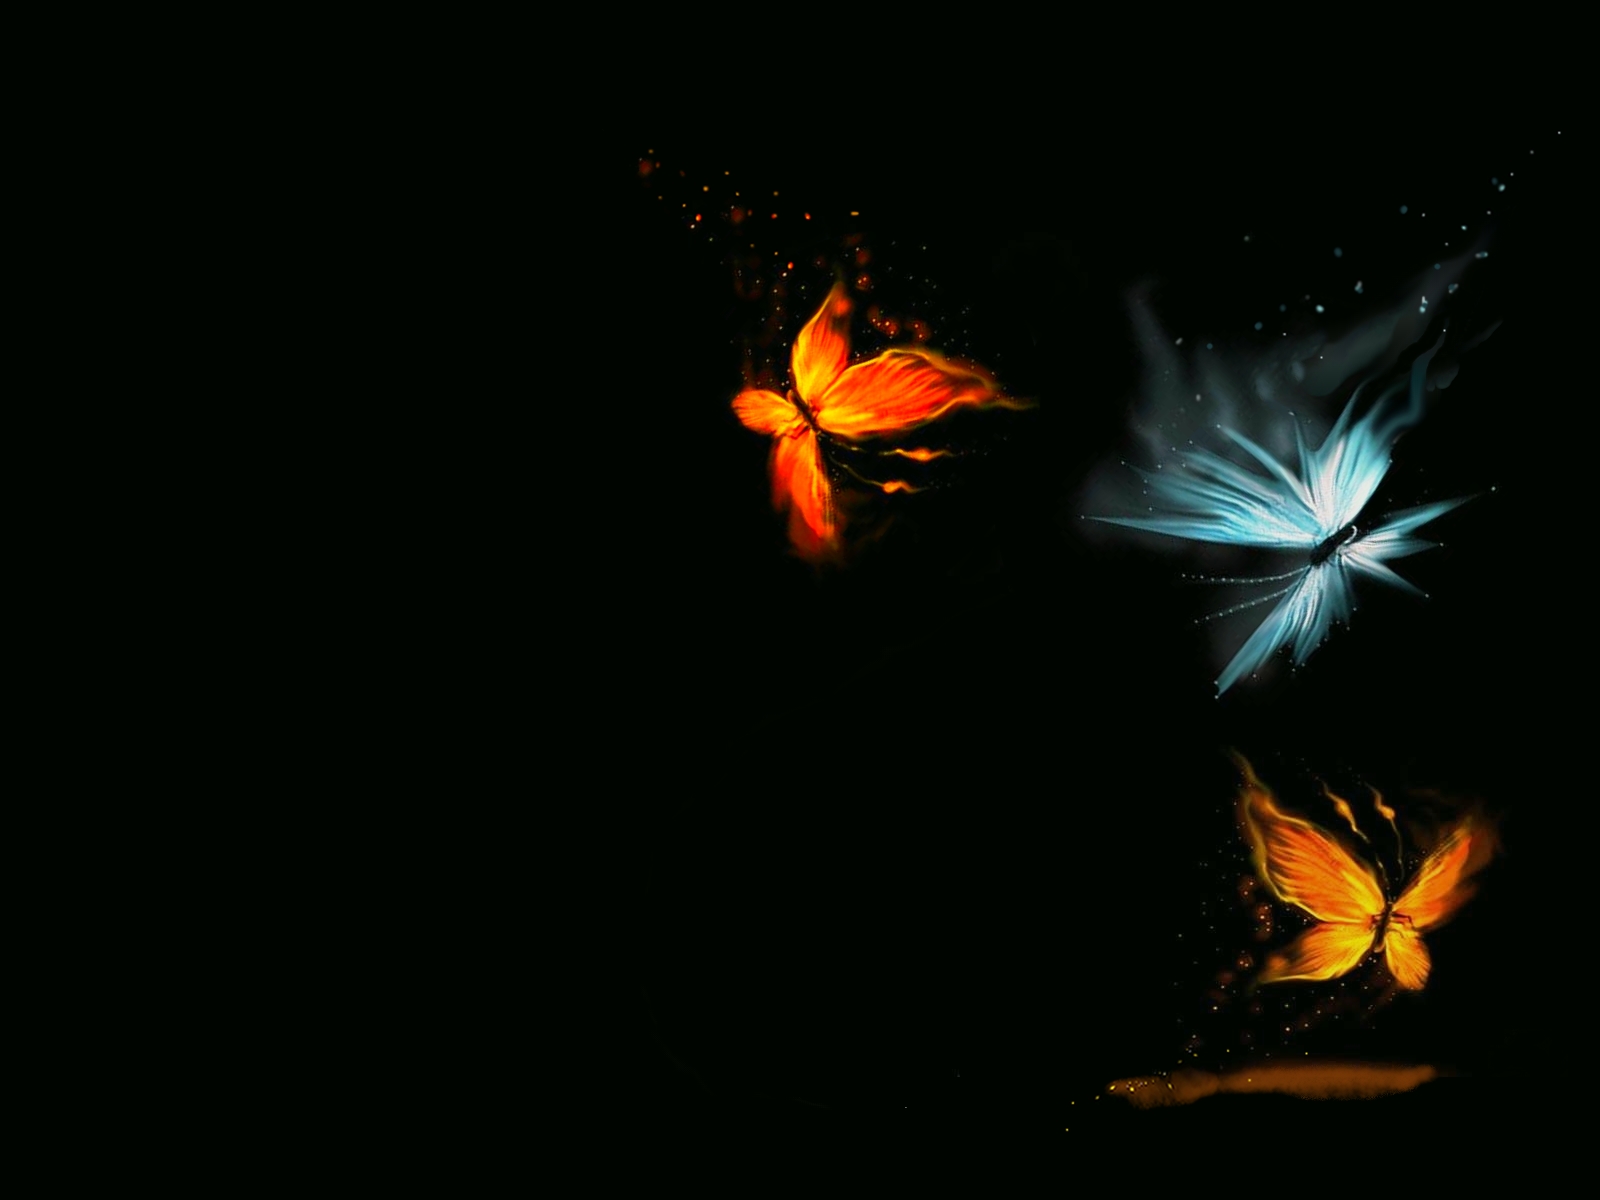 Download Wallpaper Fire and ice butterflies   1600x1200 1600x1200